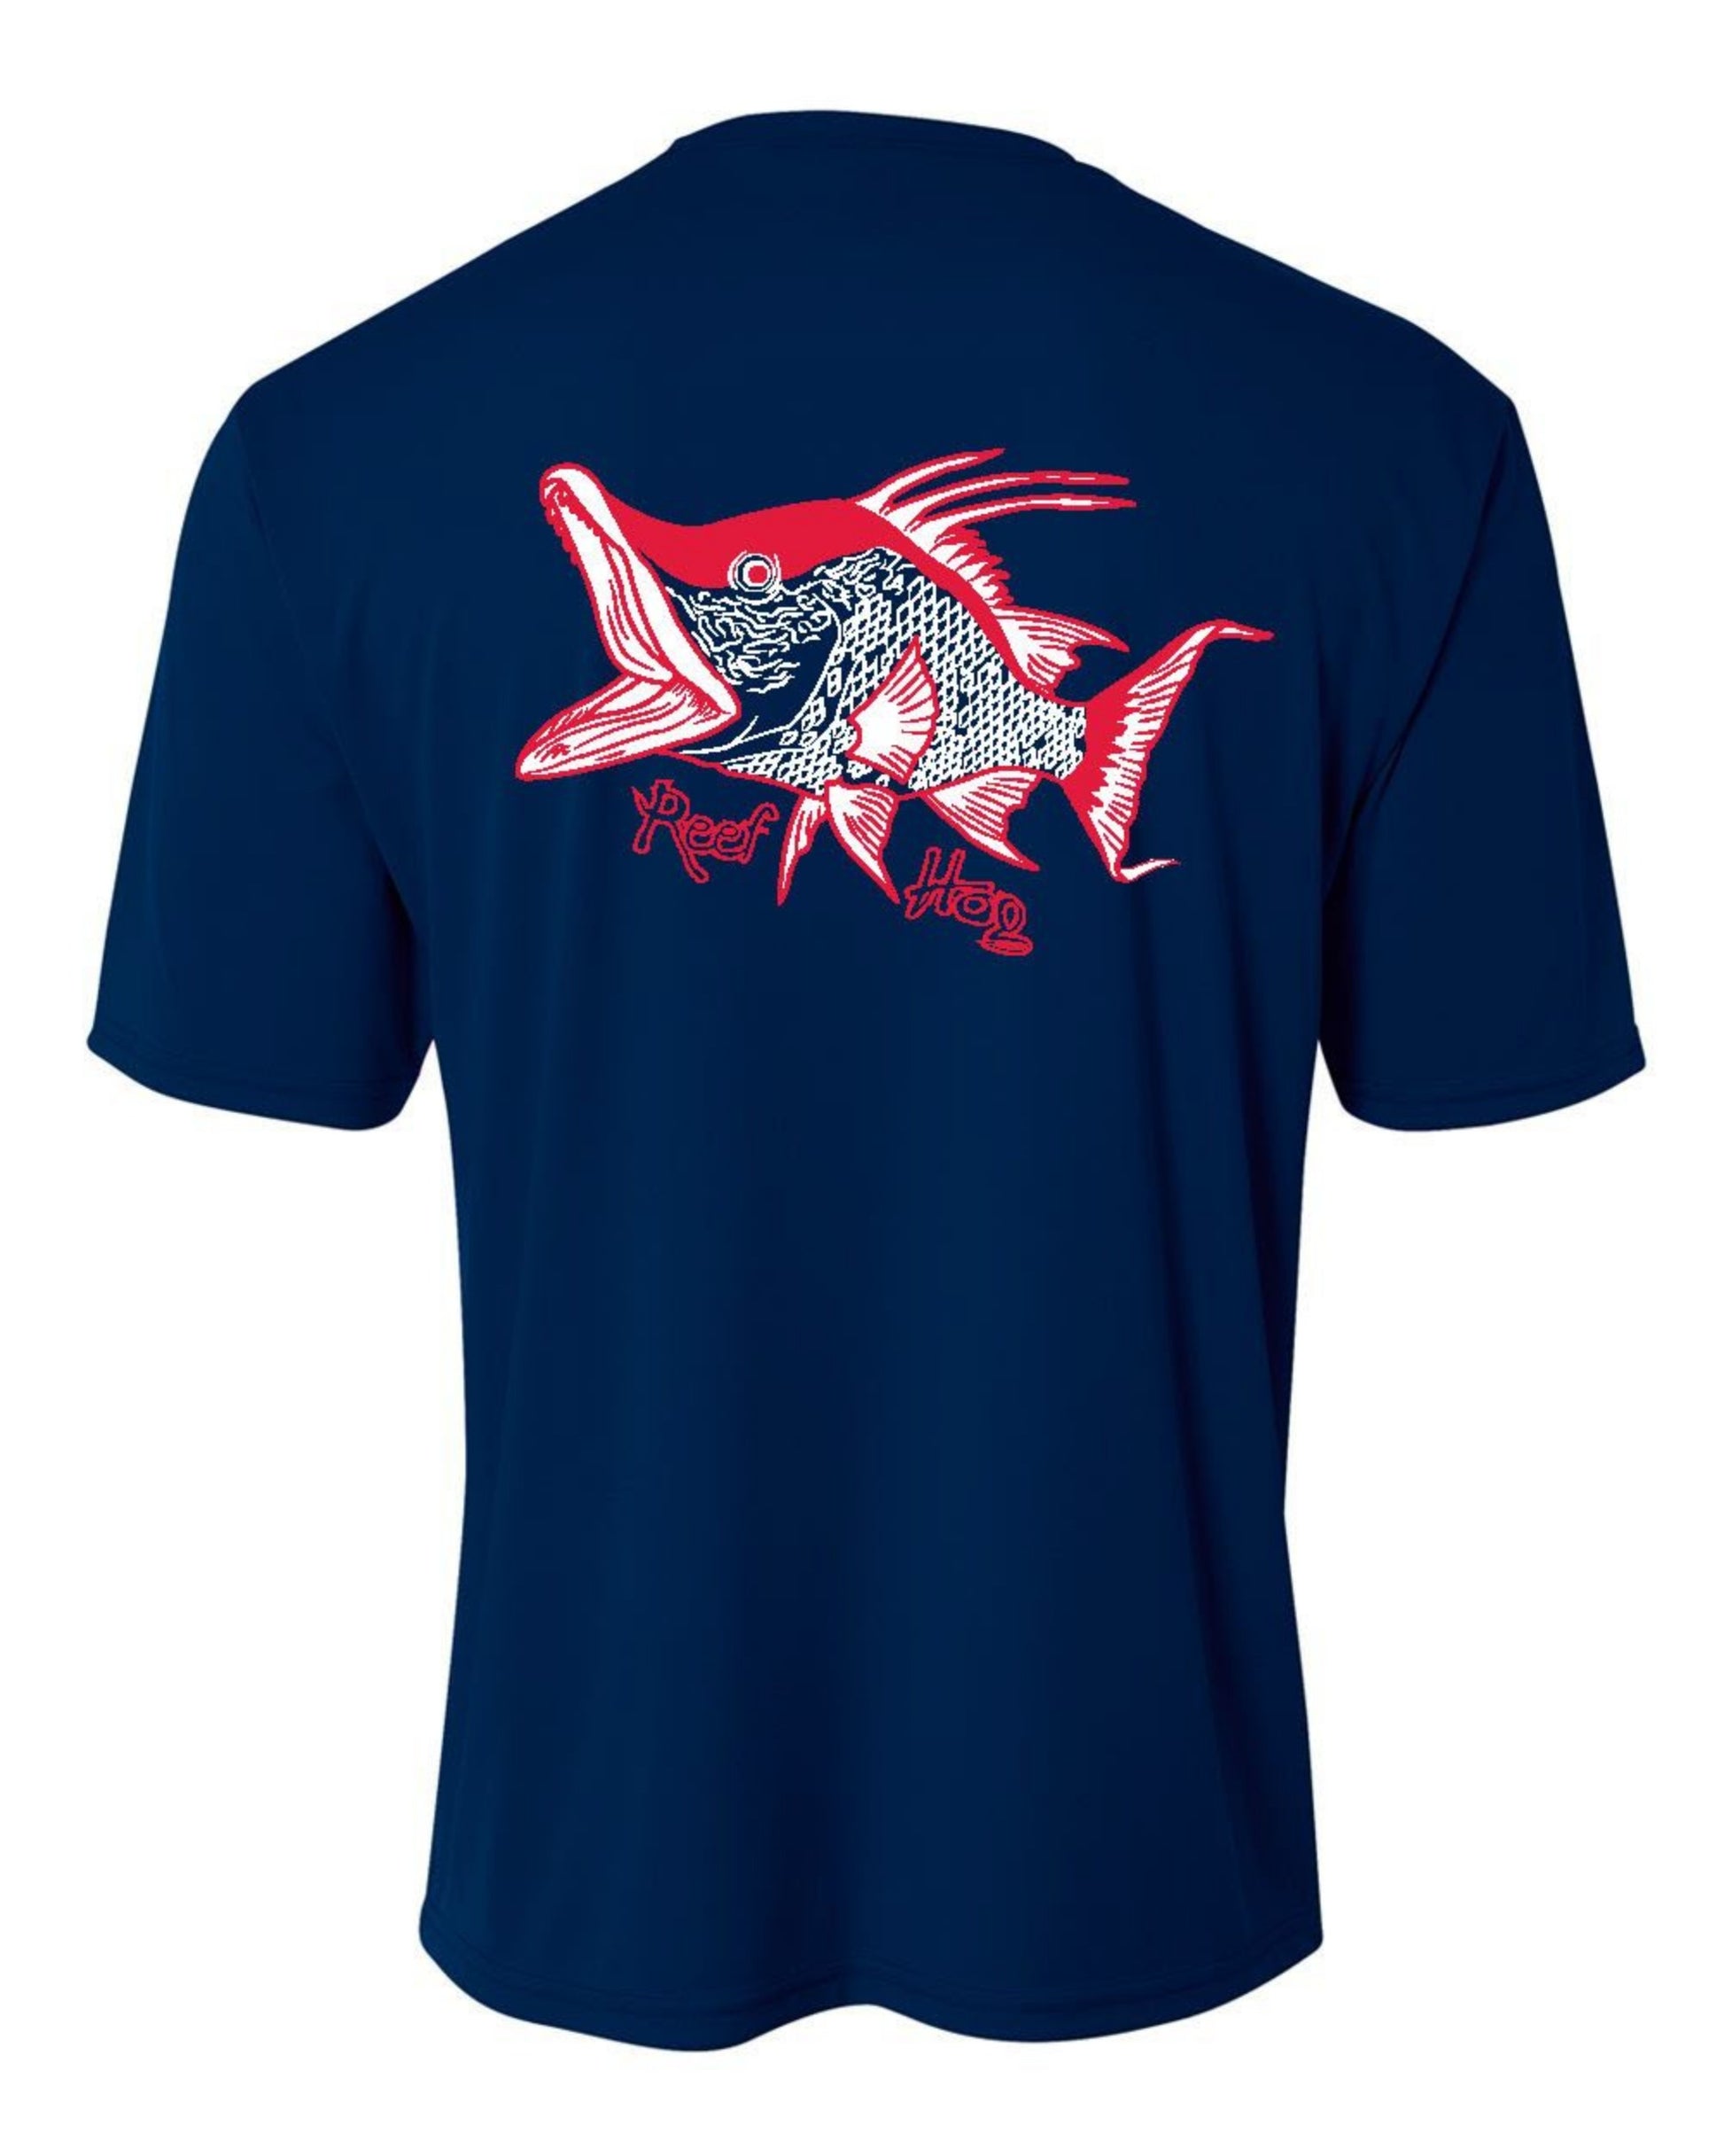 Youth Performance Fishing Shirts 50+UV Sun Protection -Reel Fishy